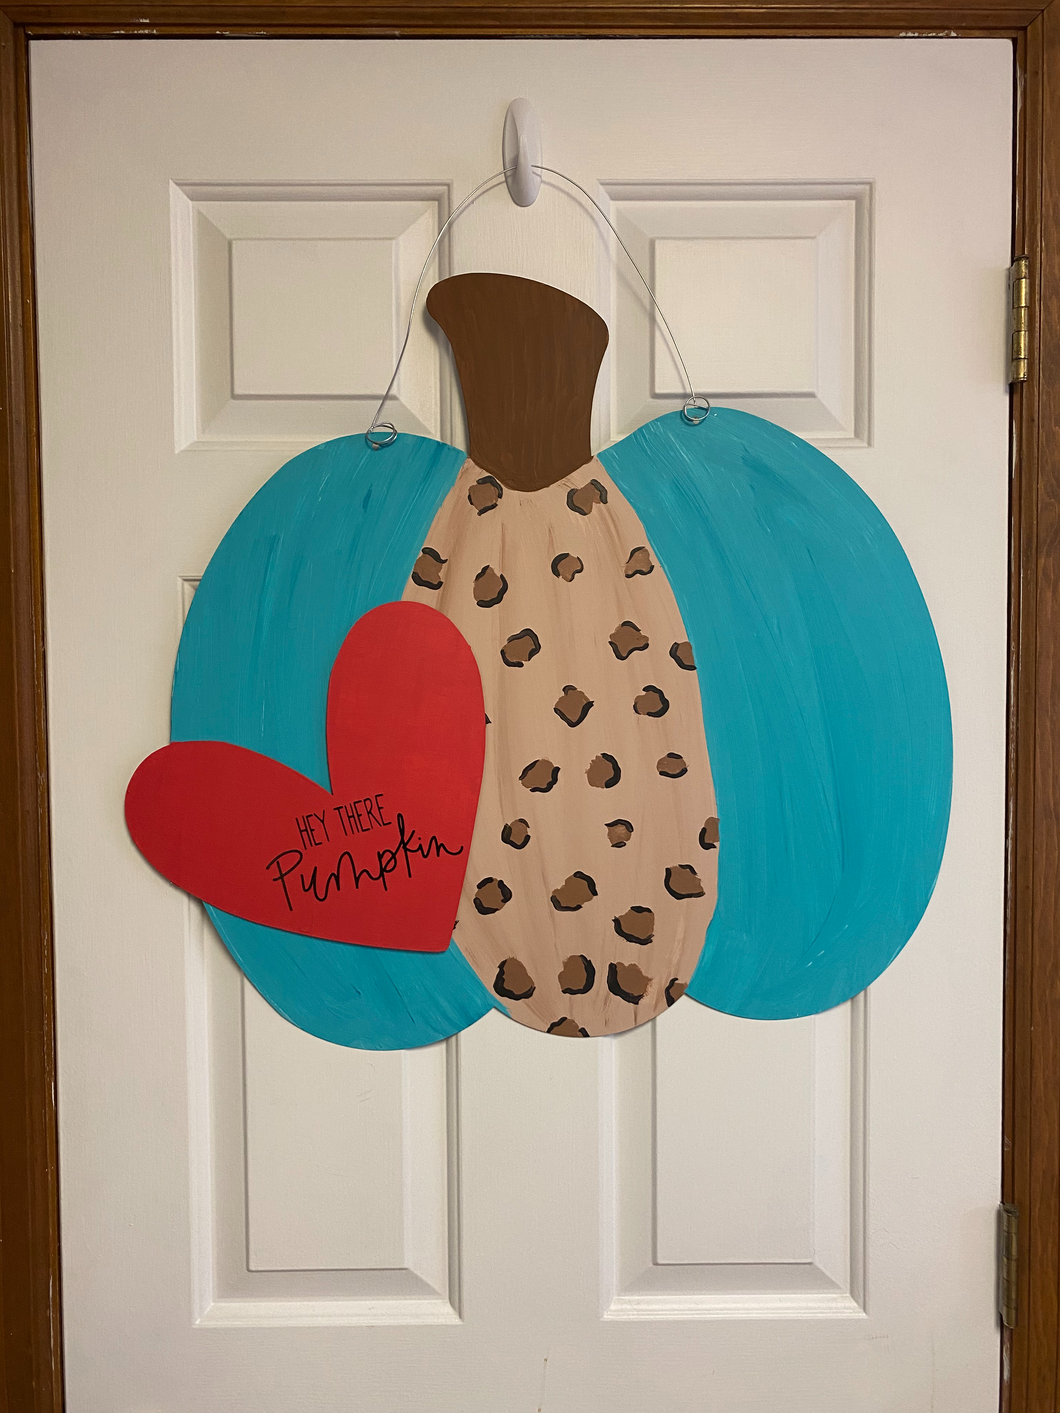 Large 24 inch bumpy pumpkin door hanger that is teal and leopard in color.